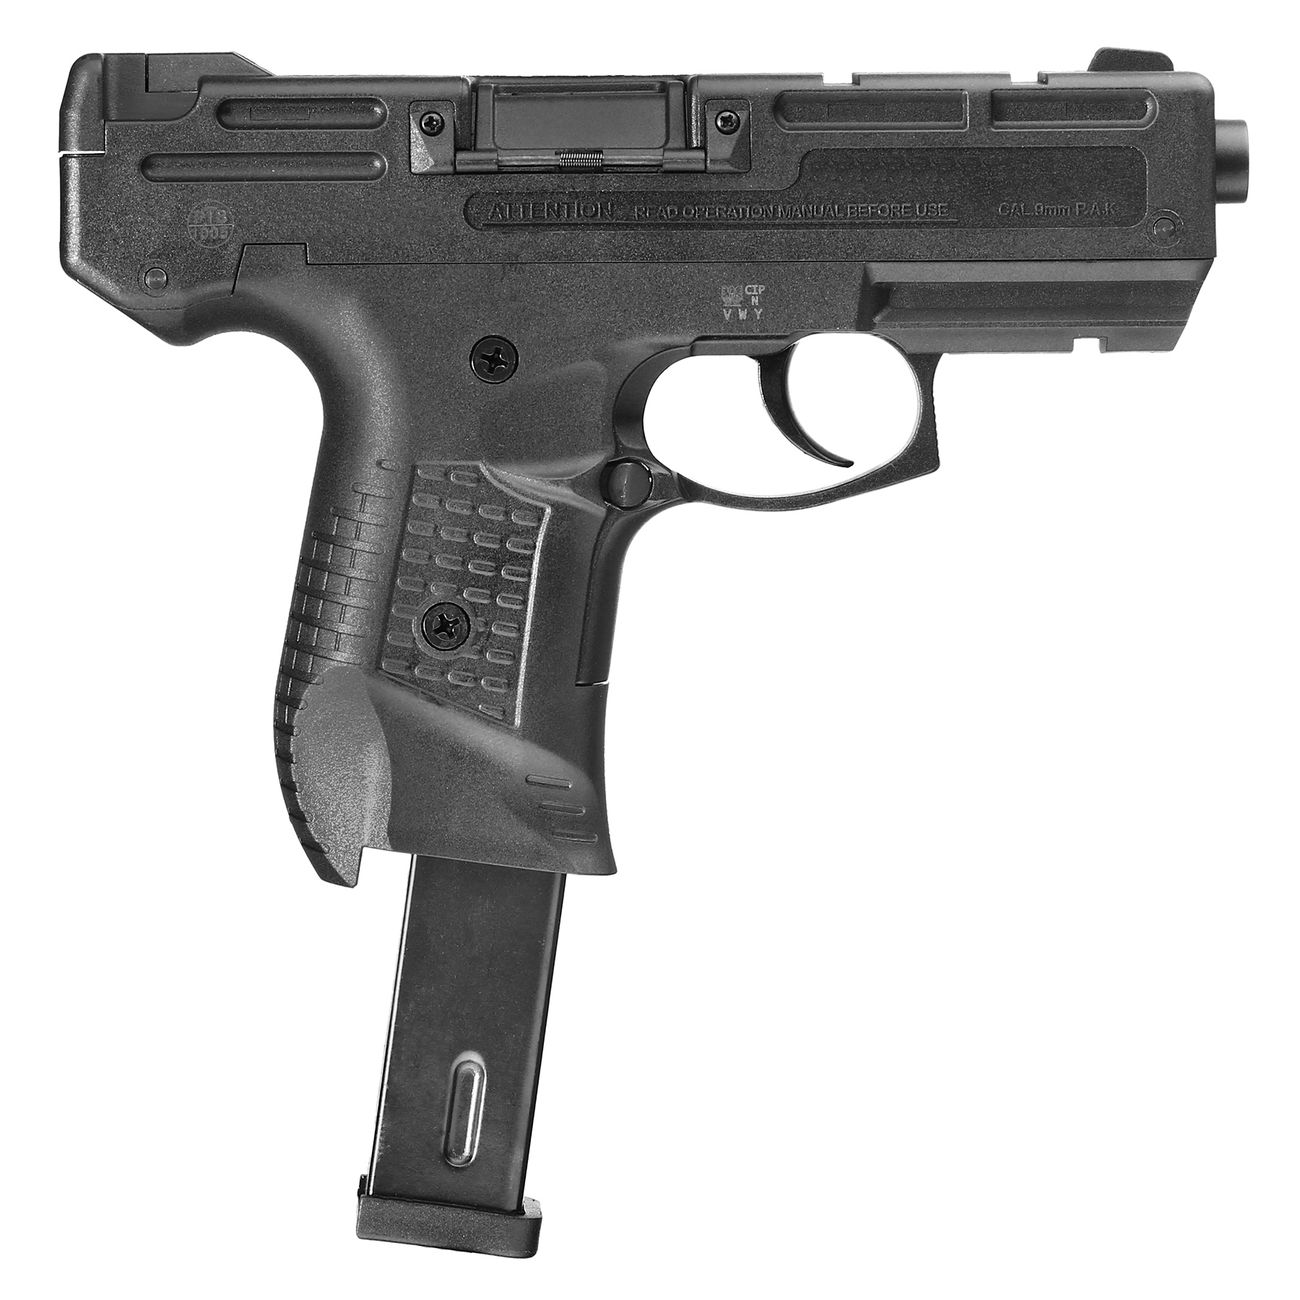 Zoraki 925 Schreckschuss-Maschinenpistole 9mm P.A.K. schwarz inkl. 2 Magazinen u. Polymerkoffer Bild 1